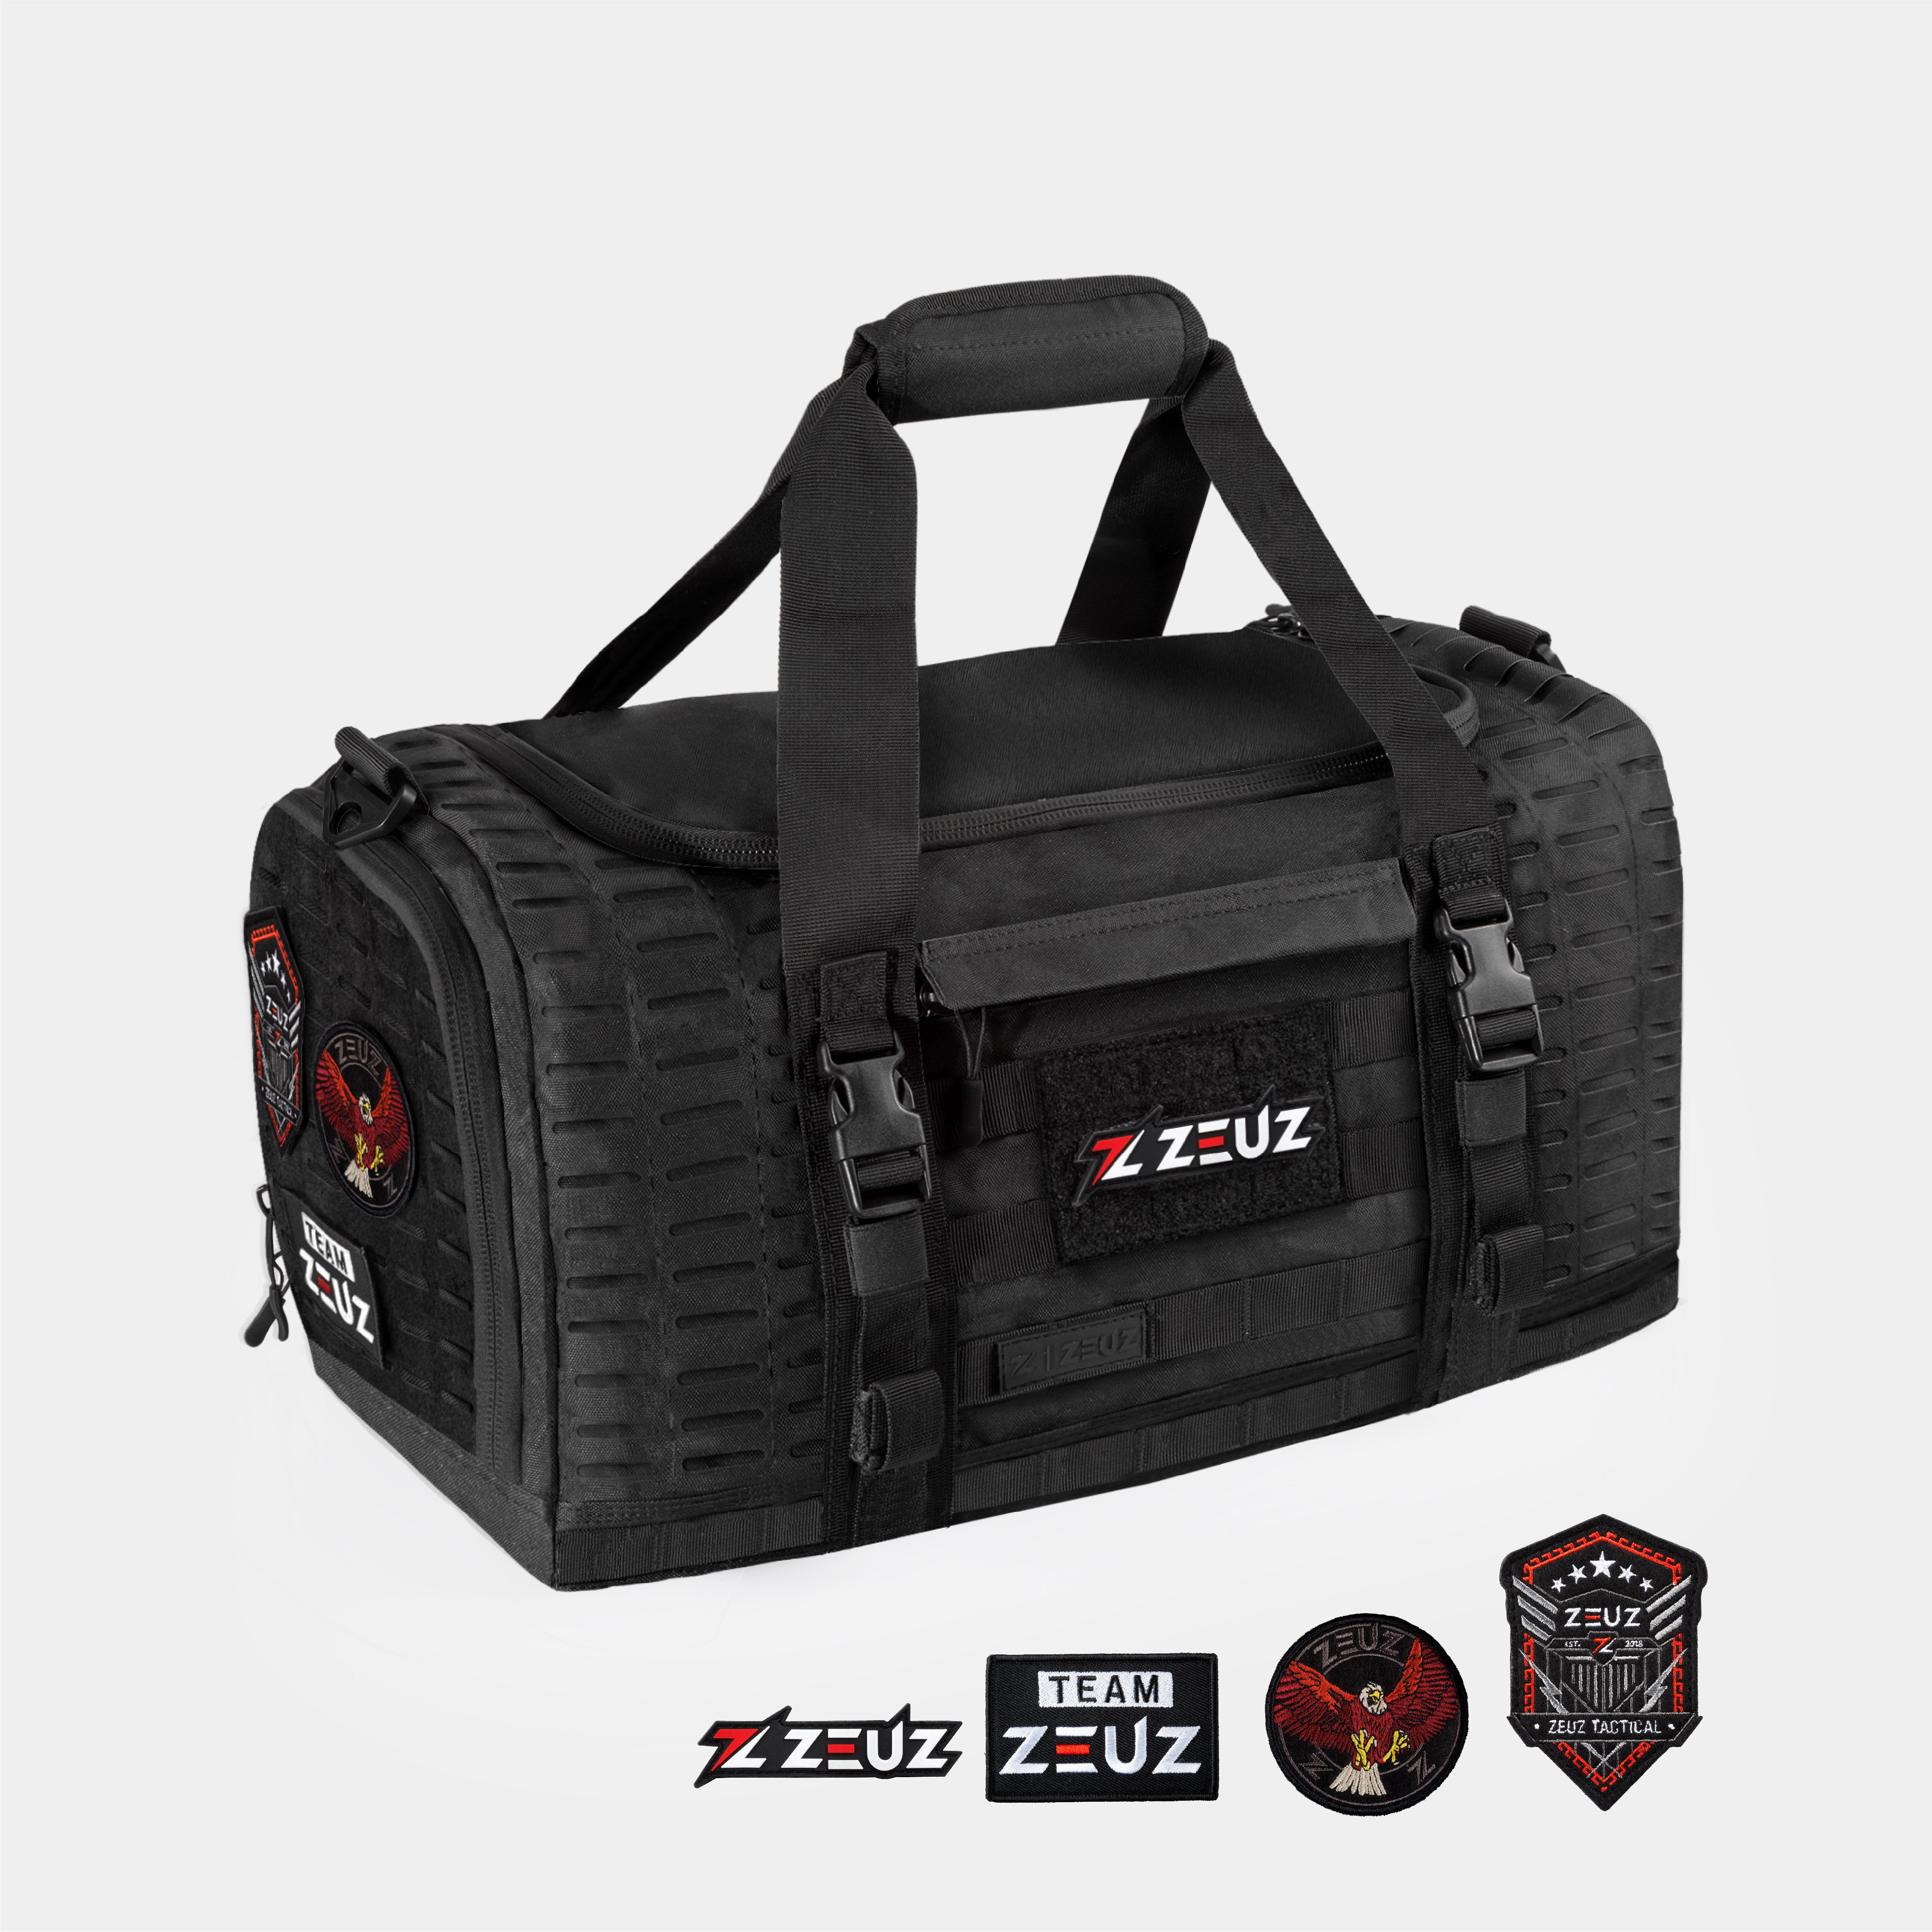 ZEUZ Sporttas - Duffel bag - Fitness & CrossFit